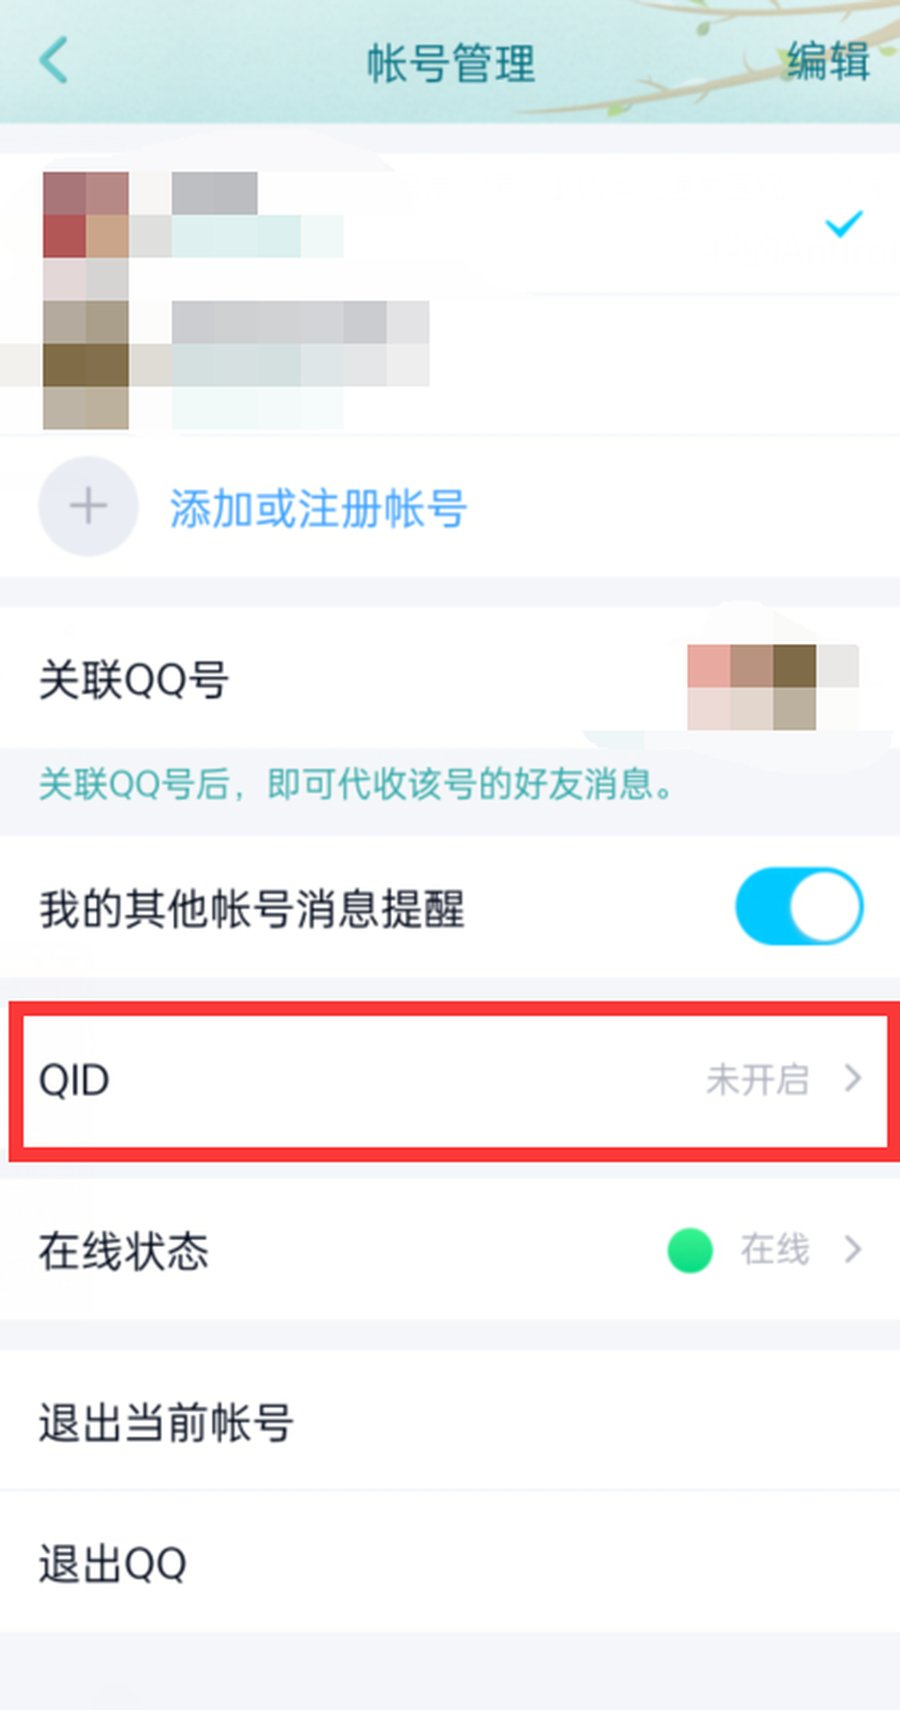 QQ|腾讯QQ上线QID功能，唯一对应